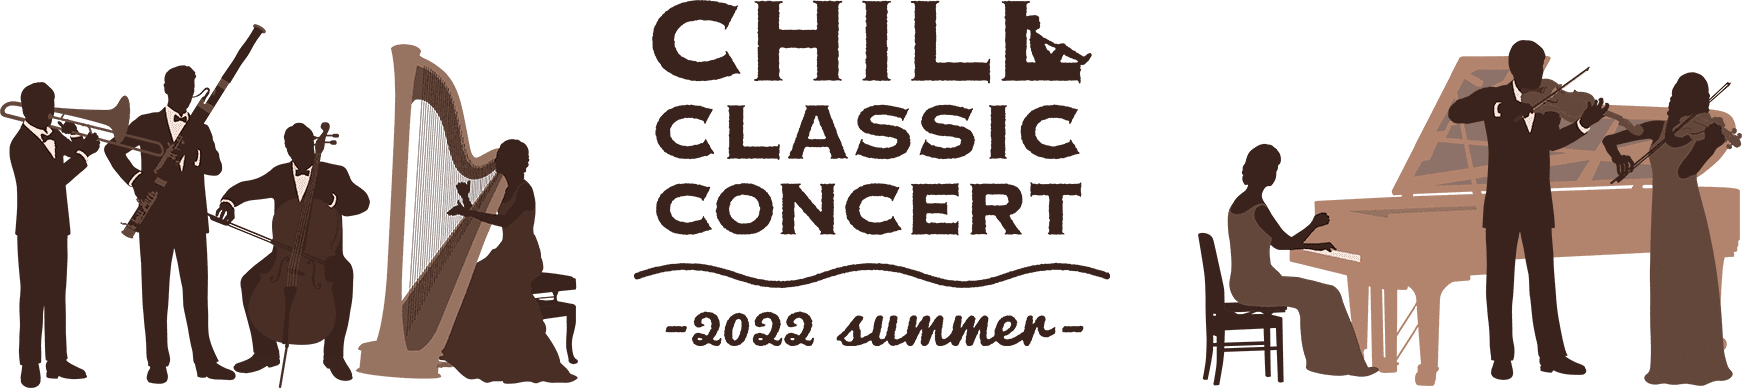 CHILL CLASSIC CONCERT -2022 summer-